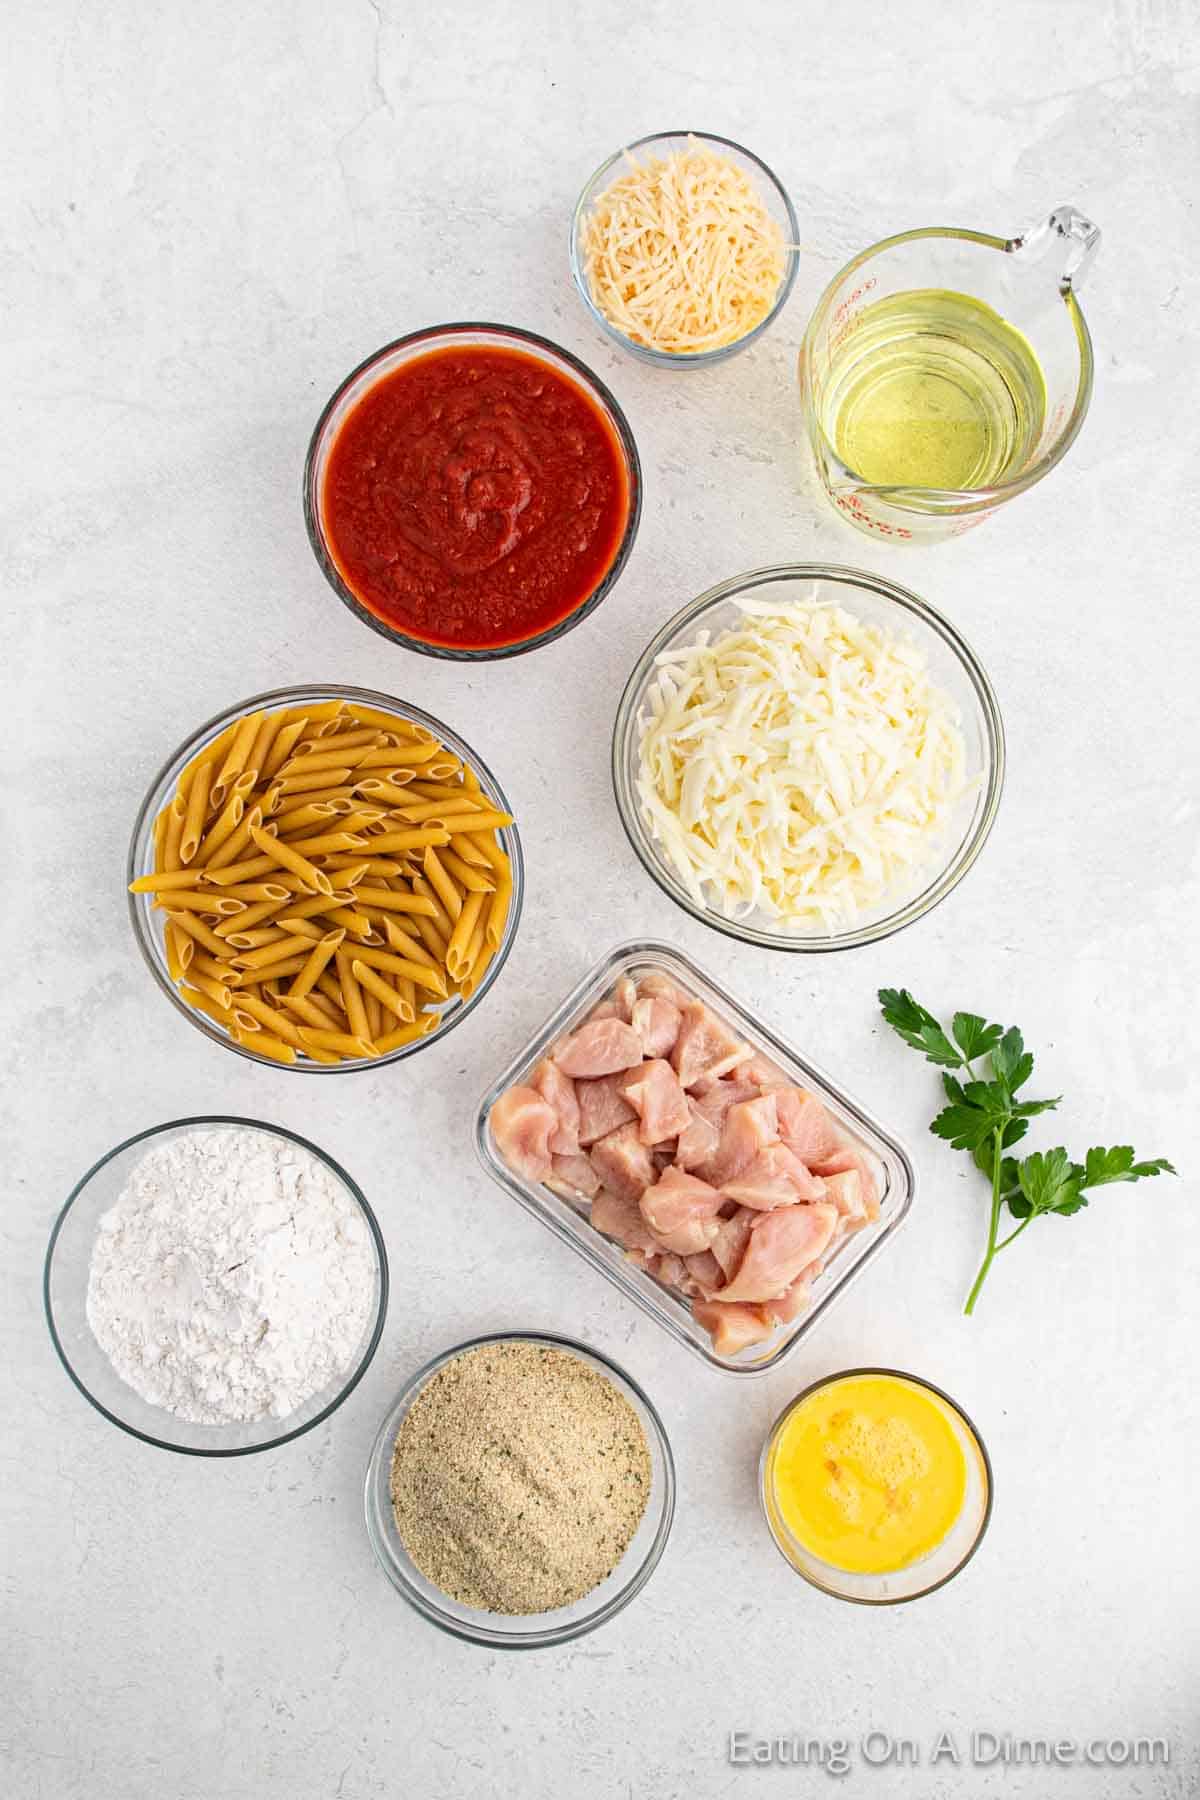 Chicken parmesan pasta ingredients - vegetable oil, chicken breasts, flour, eggs, bread crumbs, penne pasta, marinara sauce, mozzarella cheese, parmesan cheese, parsley